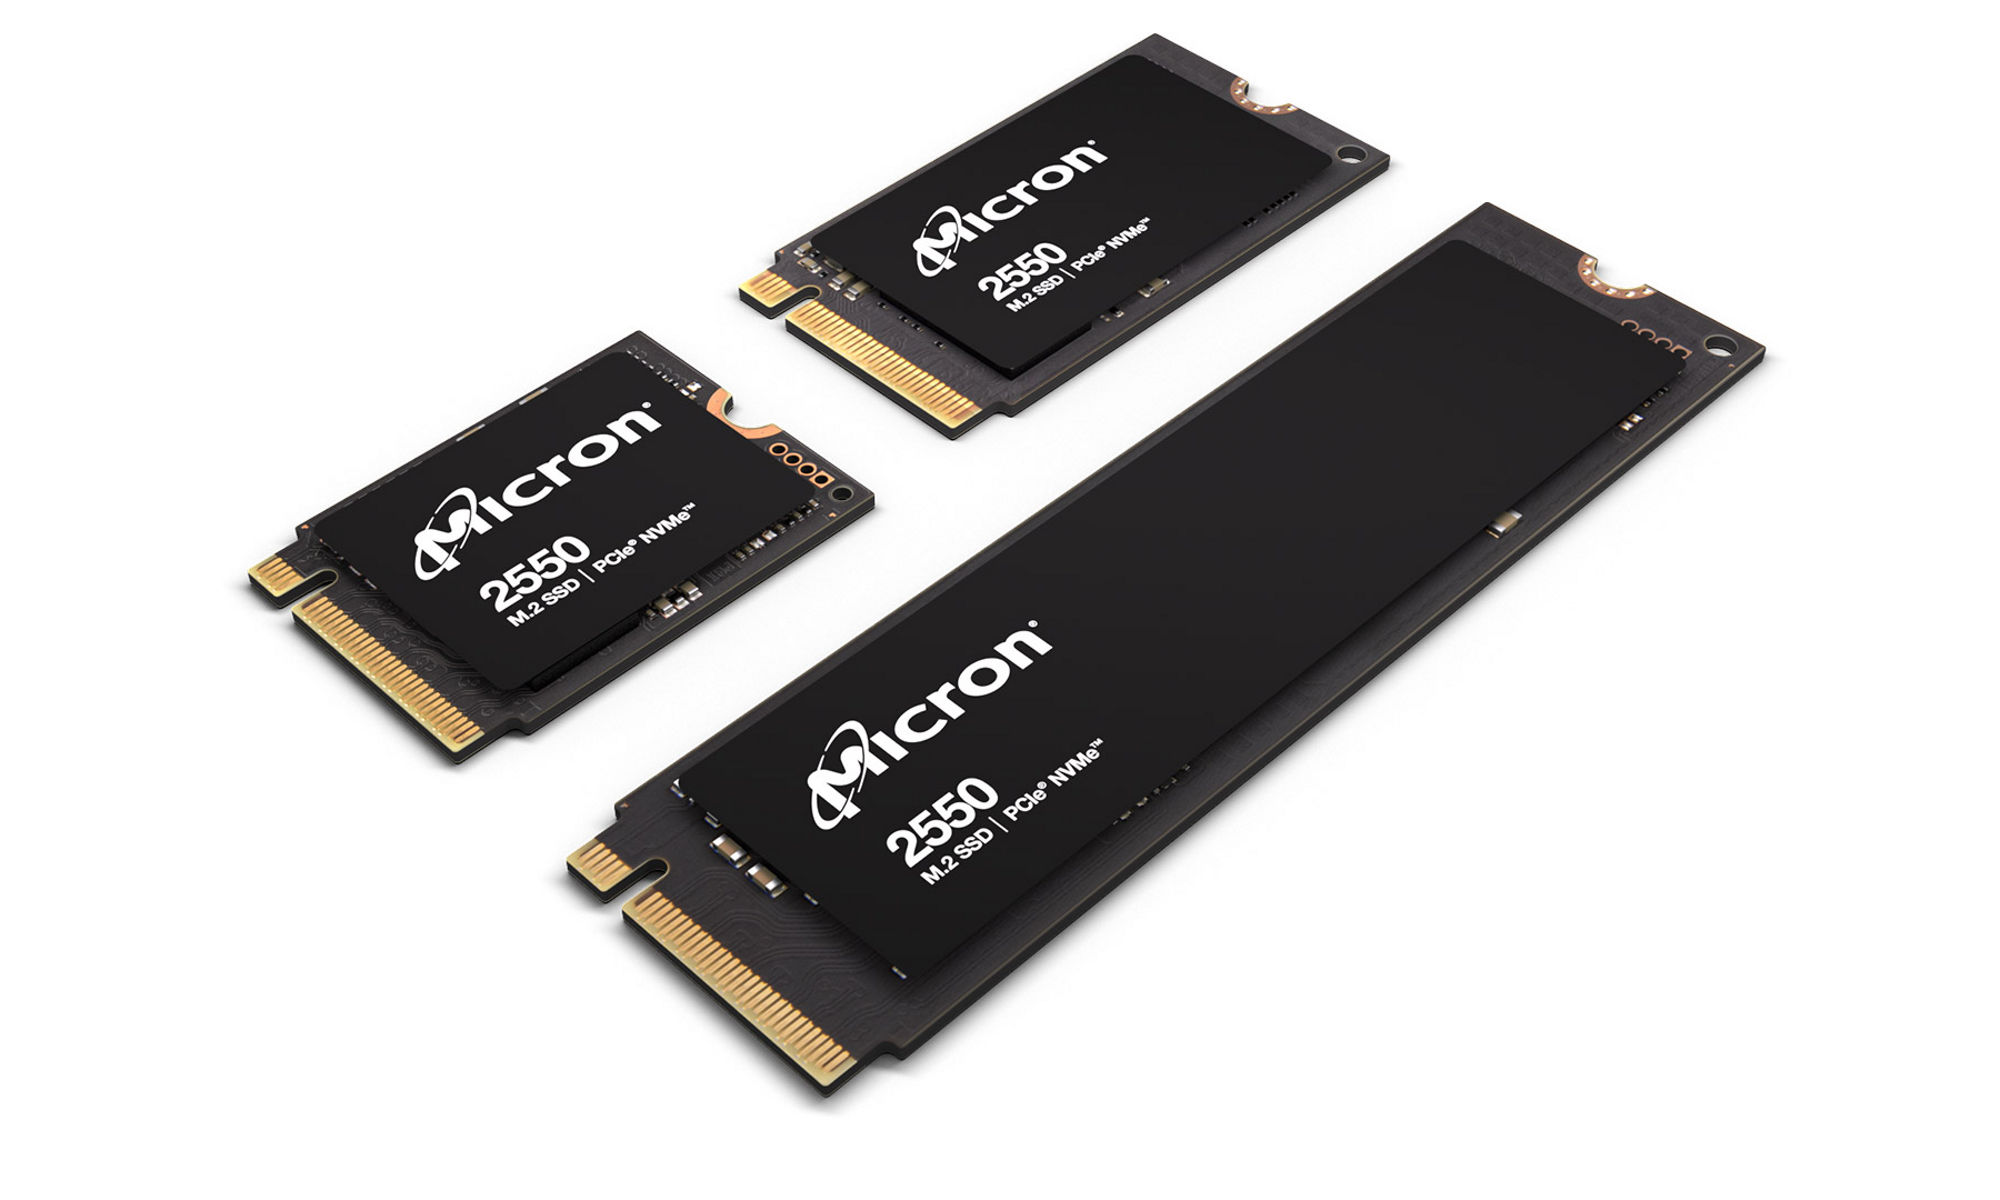 Micron 2550 SSDs